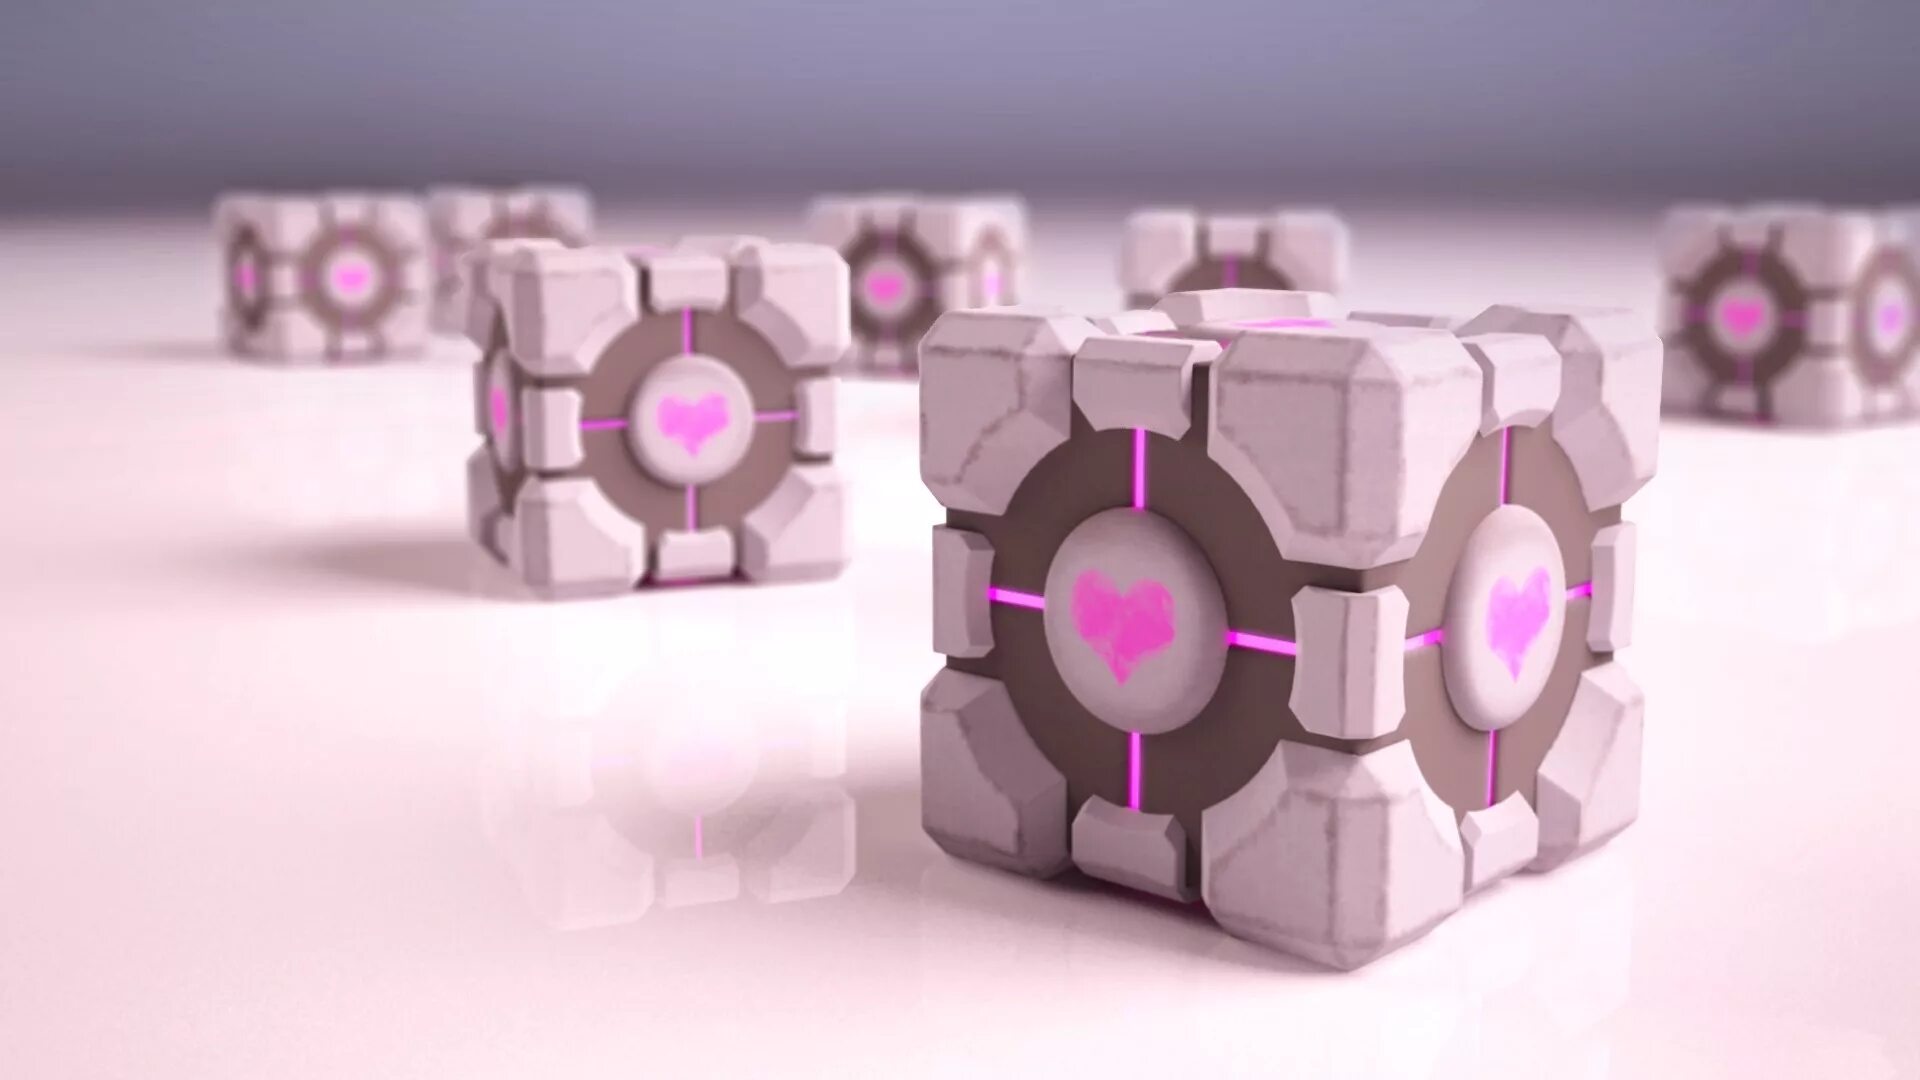 Portal 2 Cube Companion. Кубик из Portal 2. Кубы компаньоны портал 2. Куб компаньон из Portal 2. Portal collection